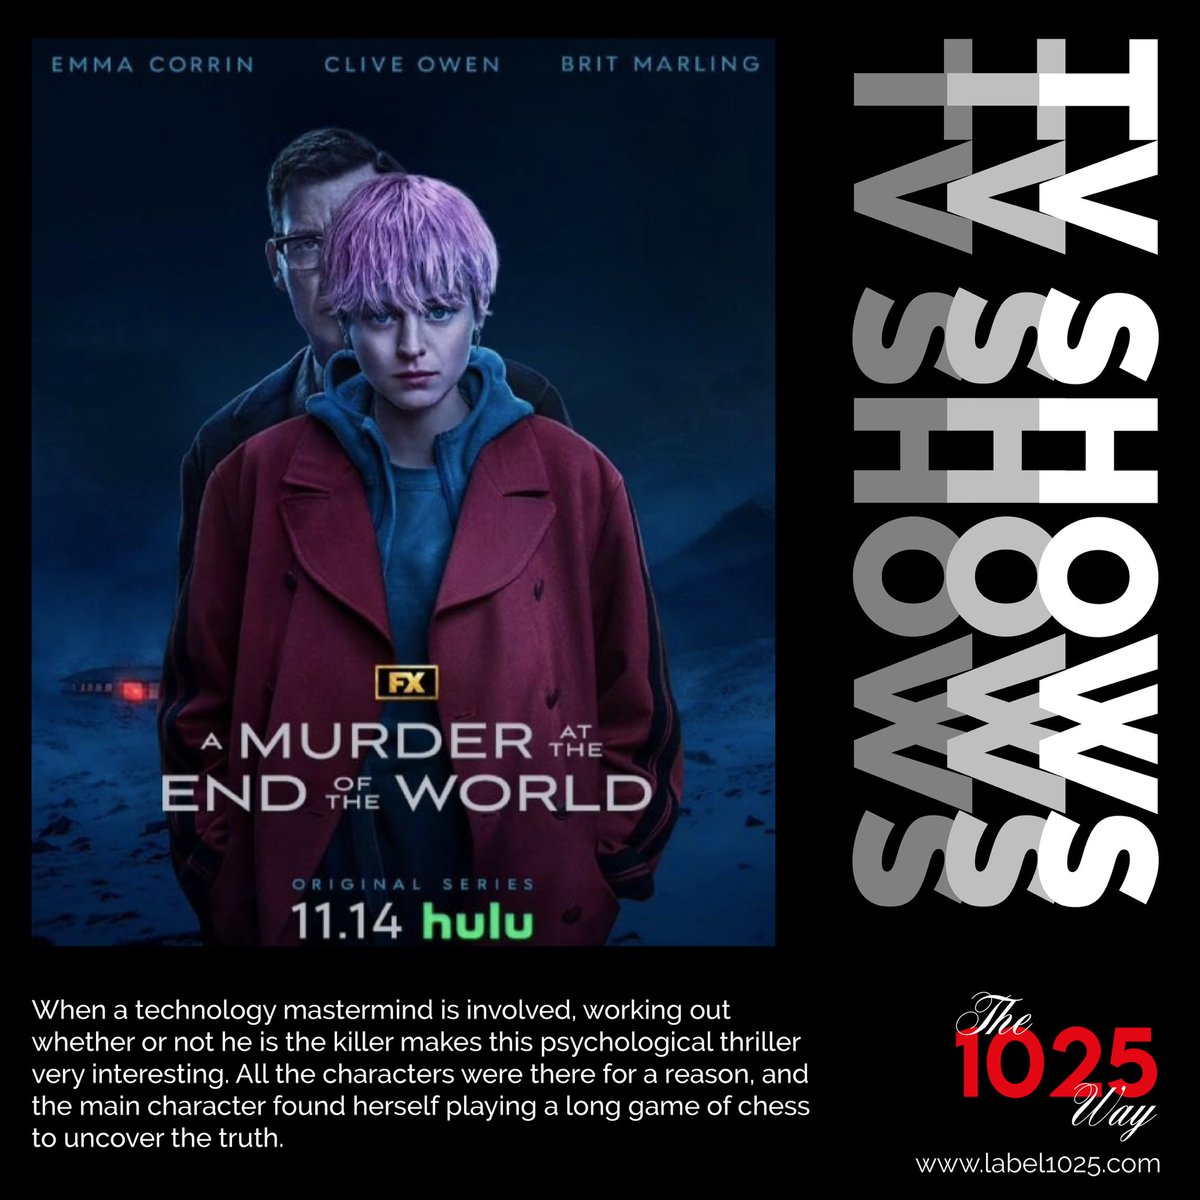 instagram.com/p/C2zmc4VINQ4/…
———————————————————
#Label1025 #the1025way #AMurderAtTheEndOfTheWorld #EmmaCorrin #HarrisDickinson #BritMarling #CliveOwen #AI #crime #drama #limitedseries #mystery #psychological #series #suspense #thriller #tv #FXProductions #Hulu #Disney #DisneyPlus